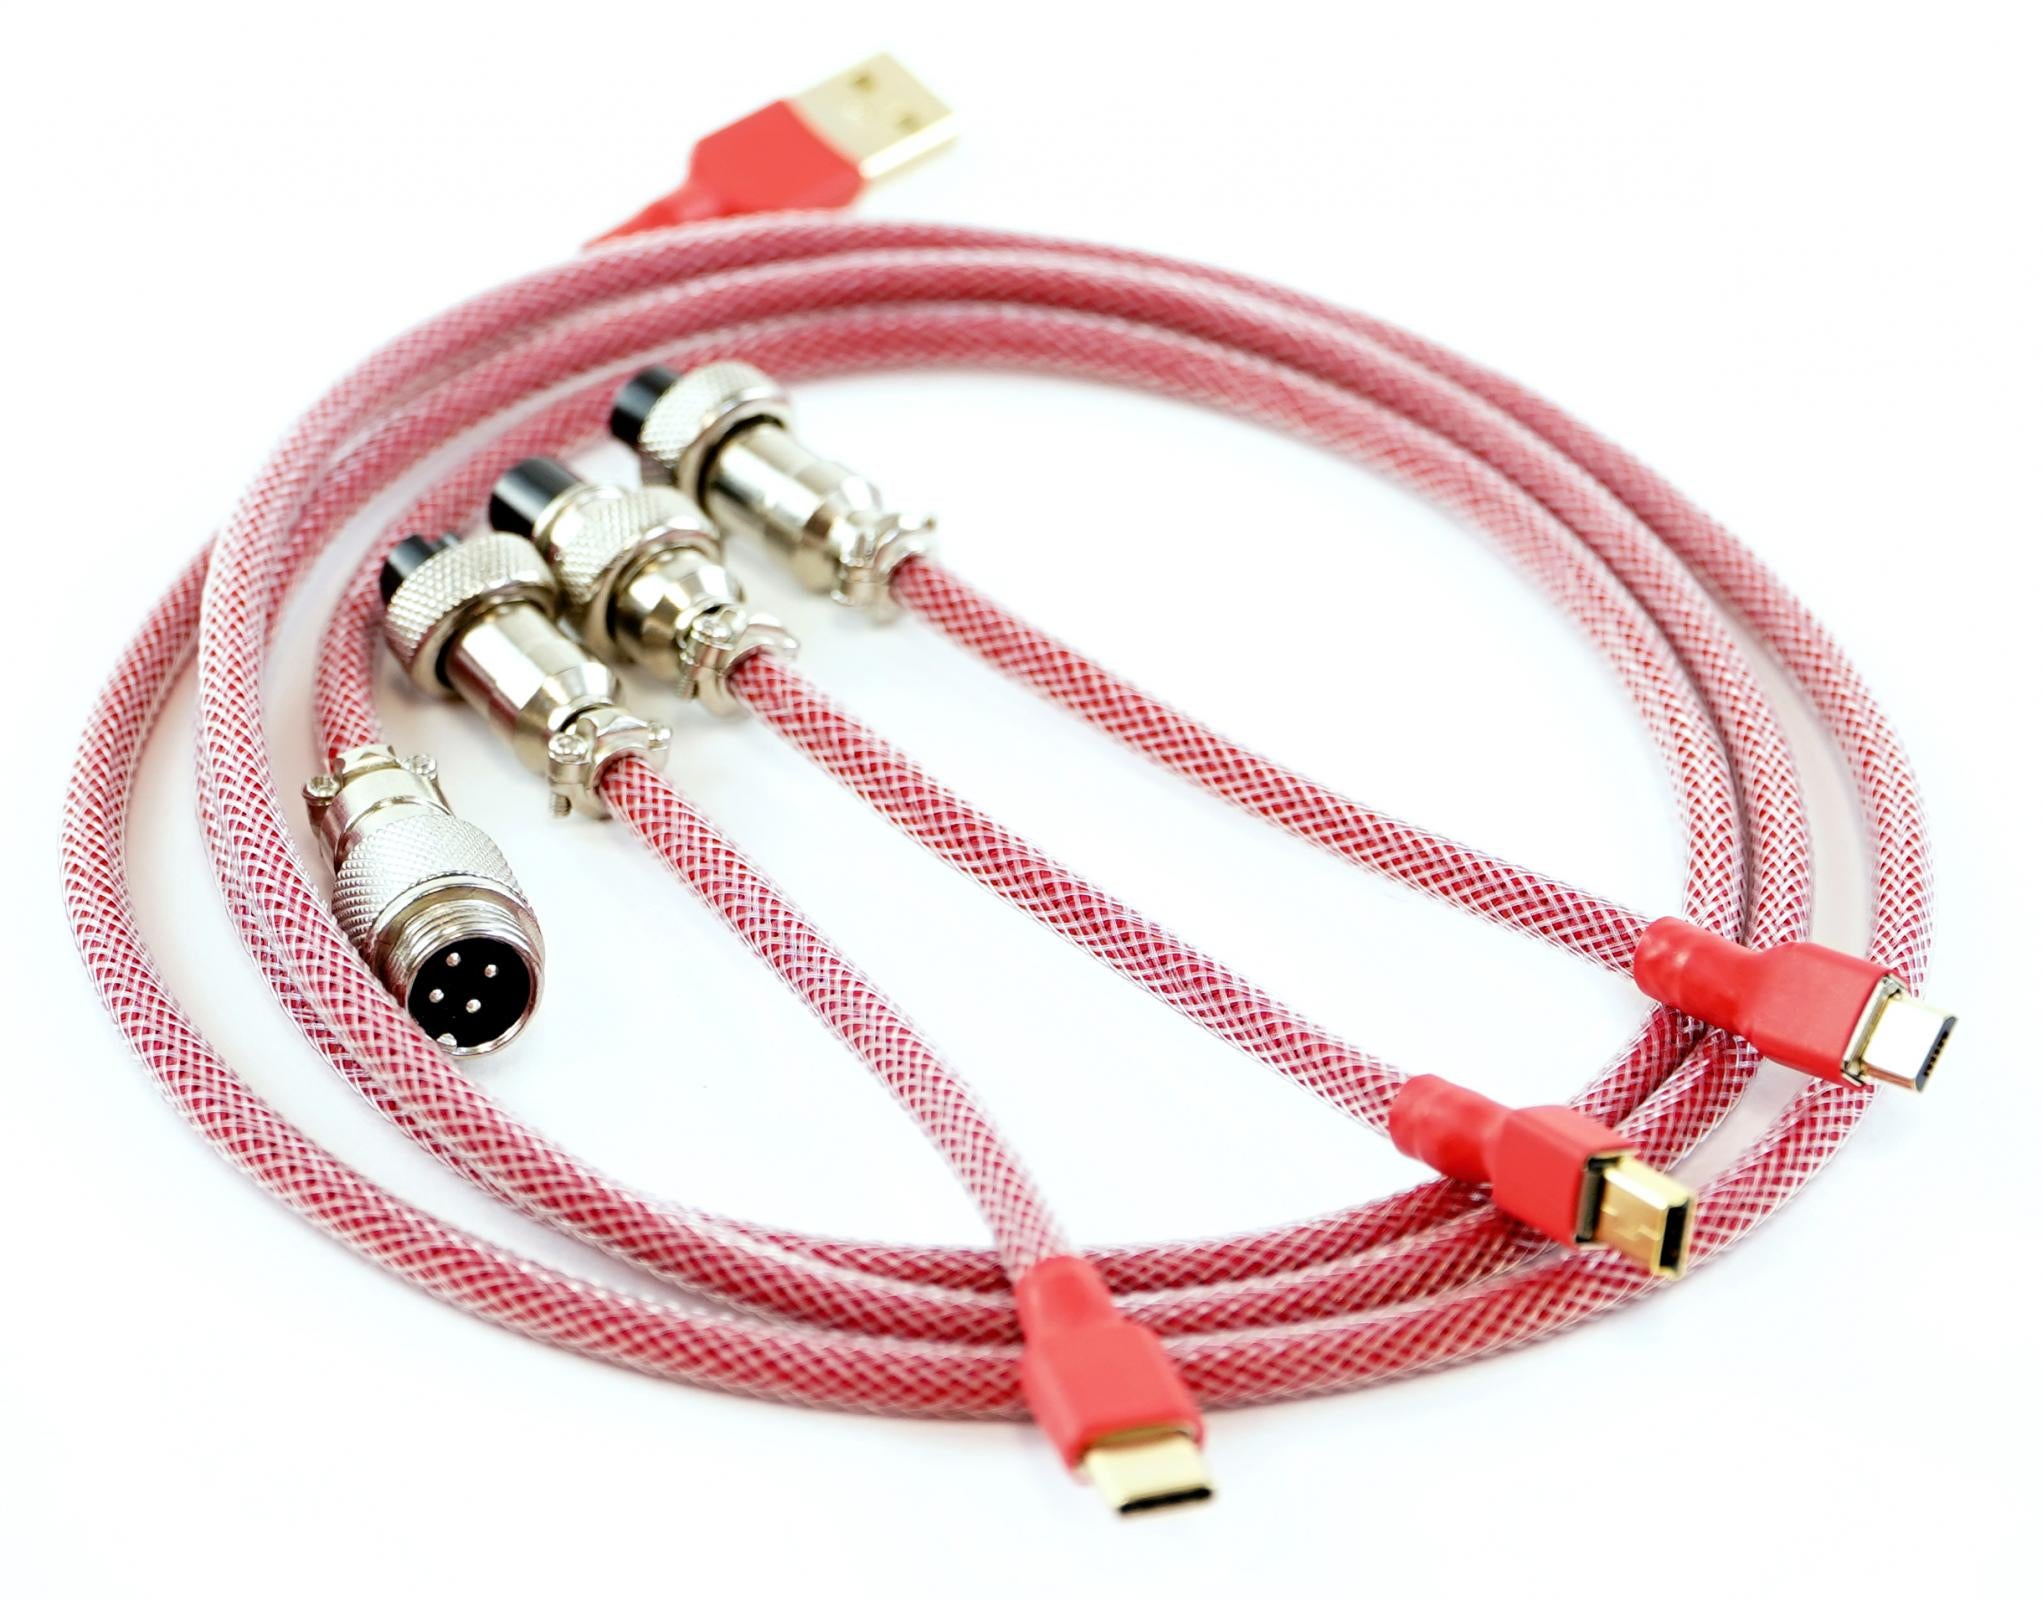 Kraken Red Sleeved Aviator Universal USB Keyboard Cable MKBF314SSI |39572|